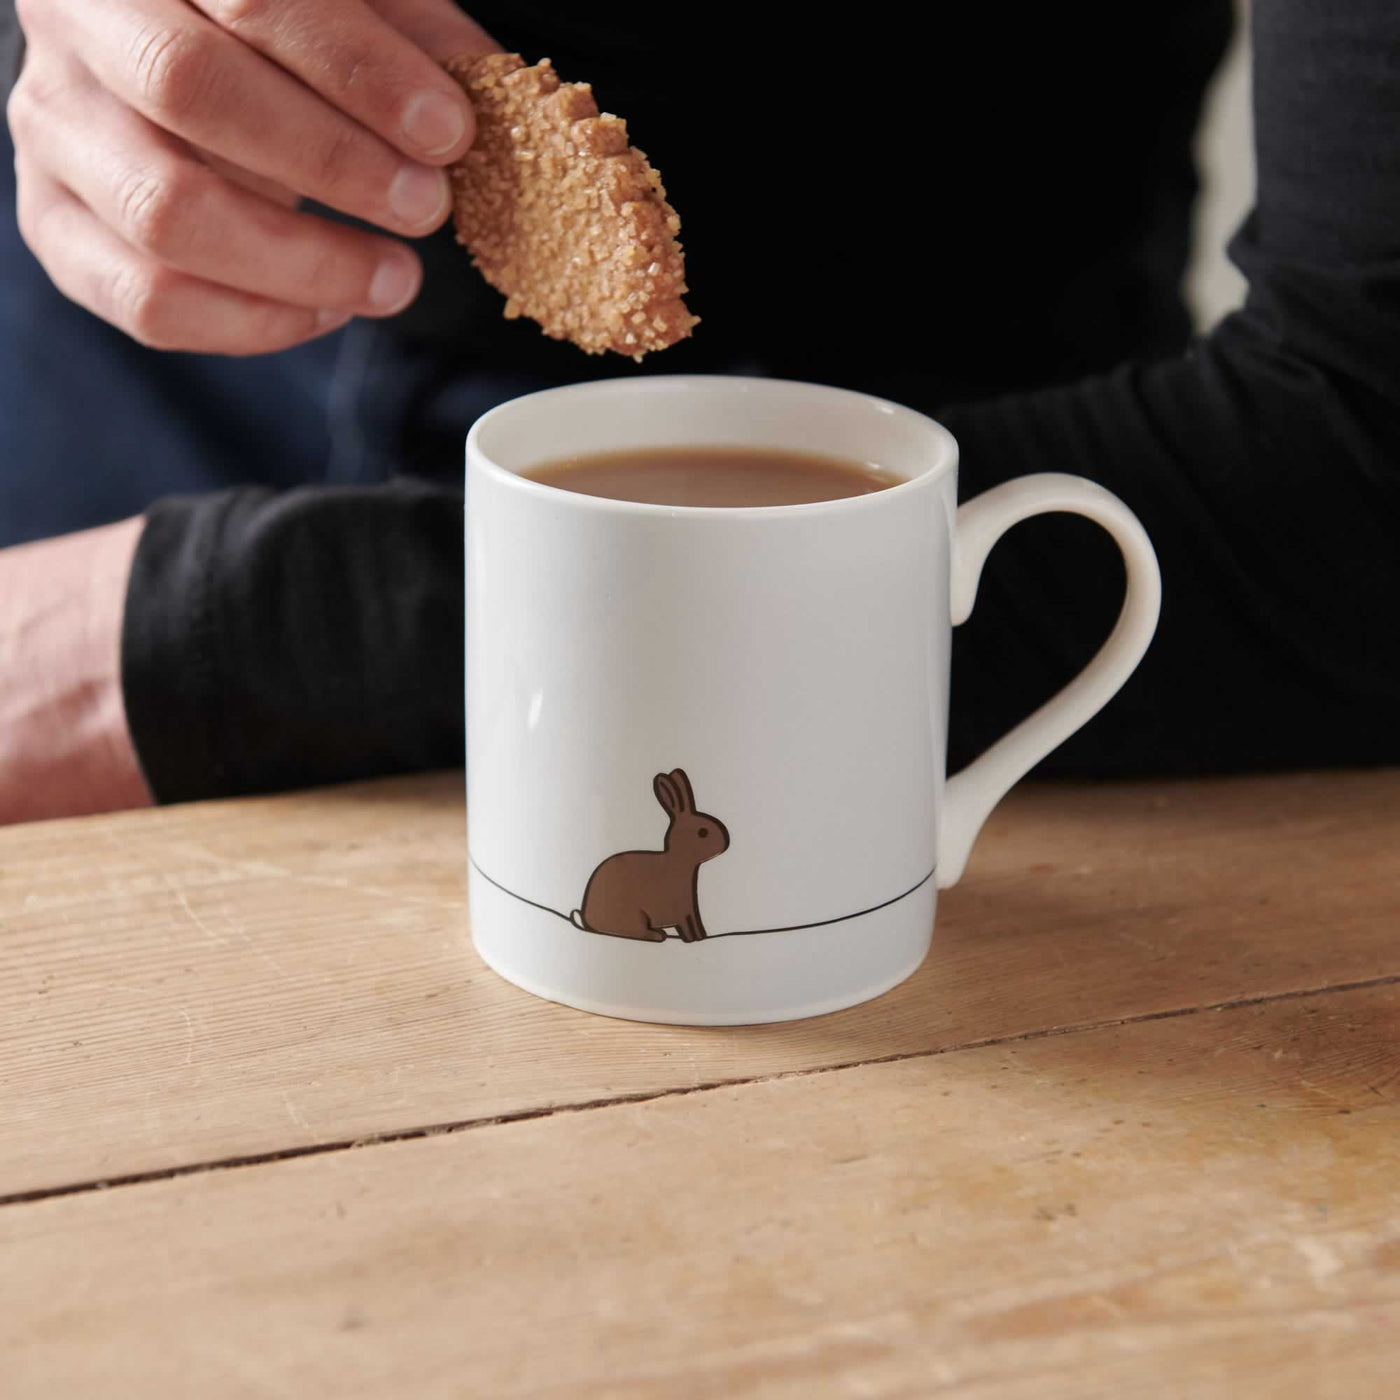 Rabbit Mug with biscuit